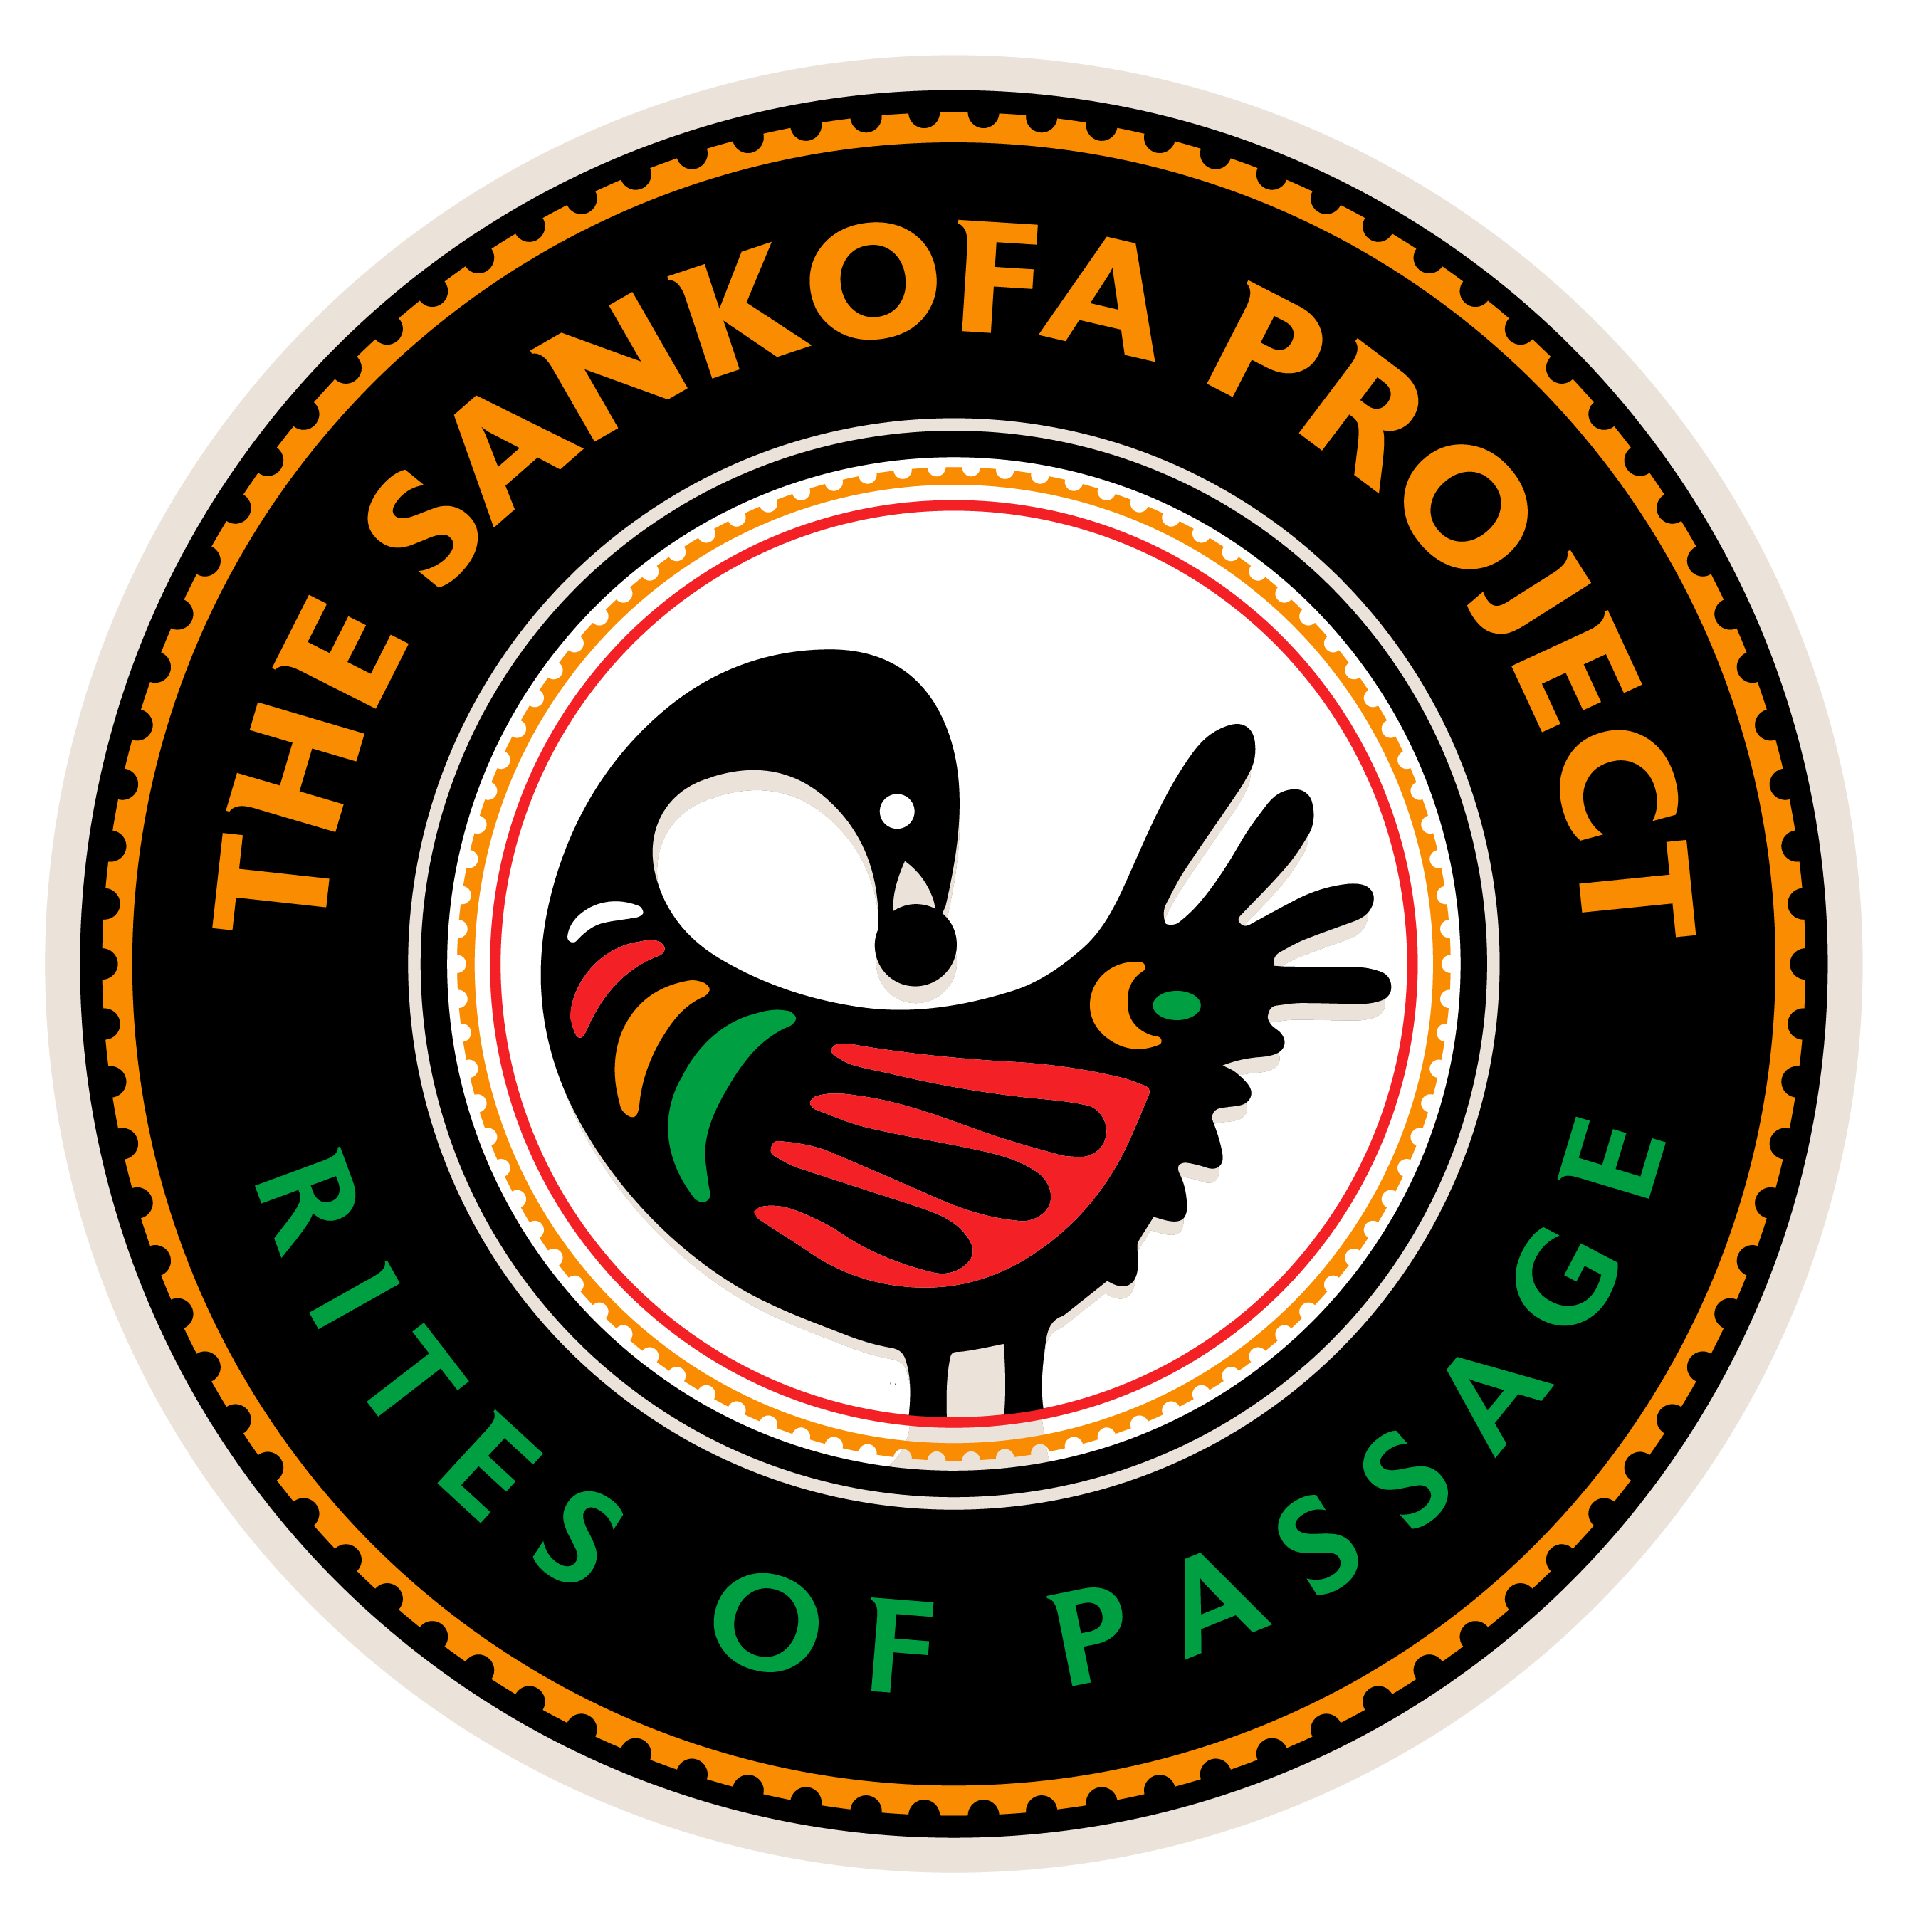 The Sankofa Project 